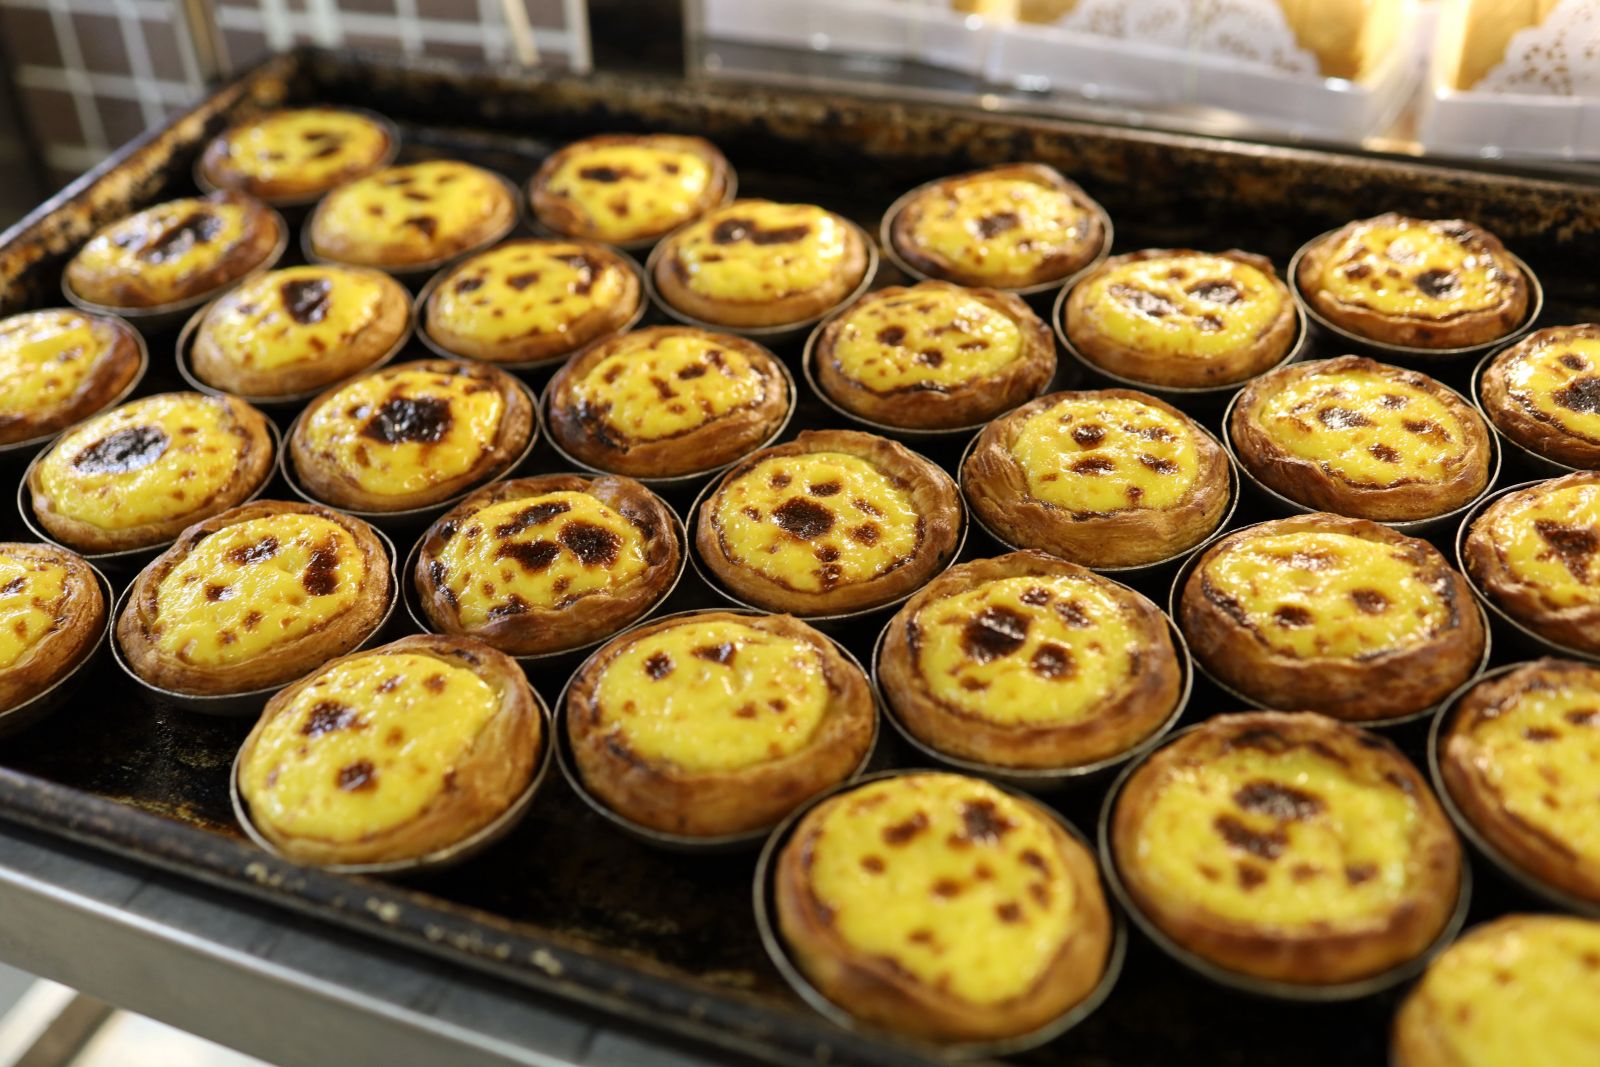 Portuguese tarts look so attractive to get!